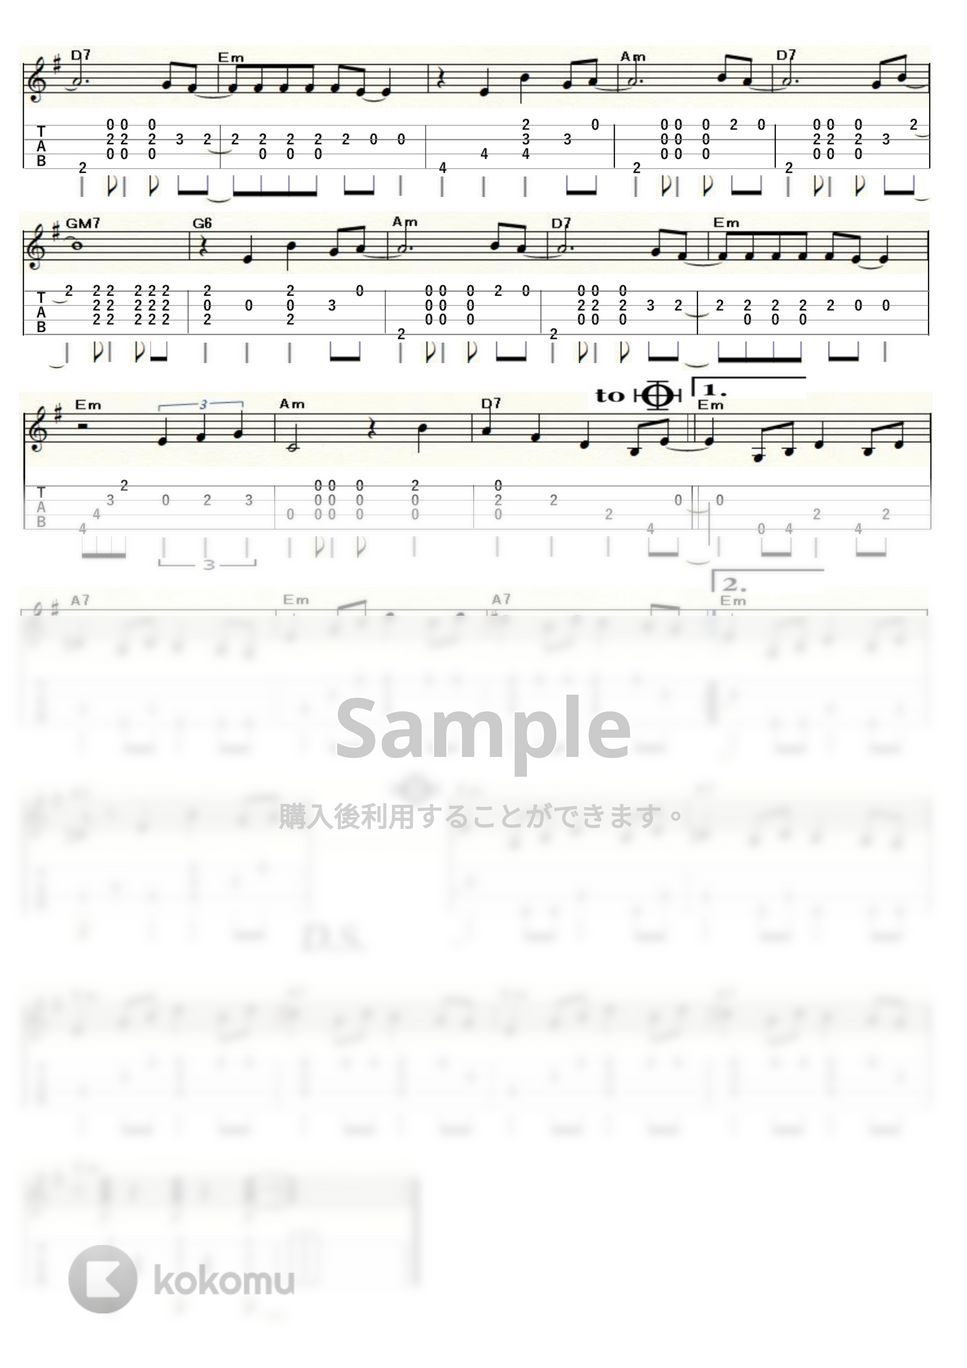 松任谷由実 - 真夏の夜の夢 (ｳｸﾚﾚｿﾛ / Low-G / 上級) by ukulelepapa